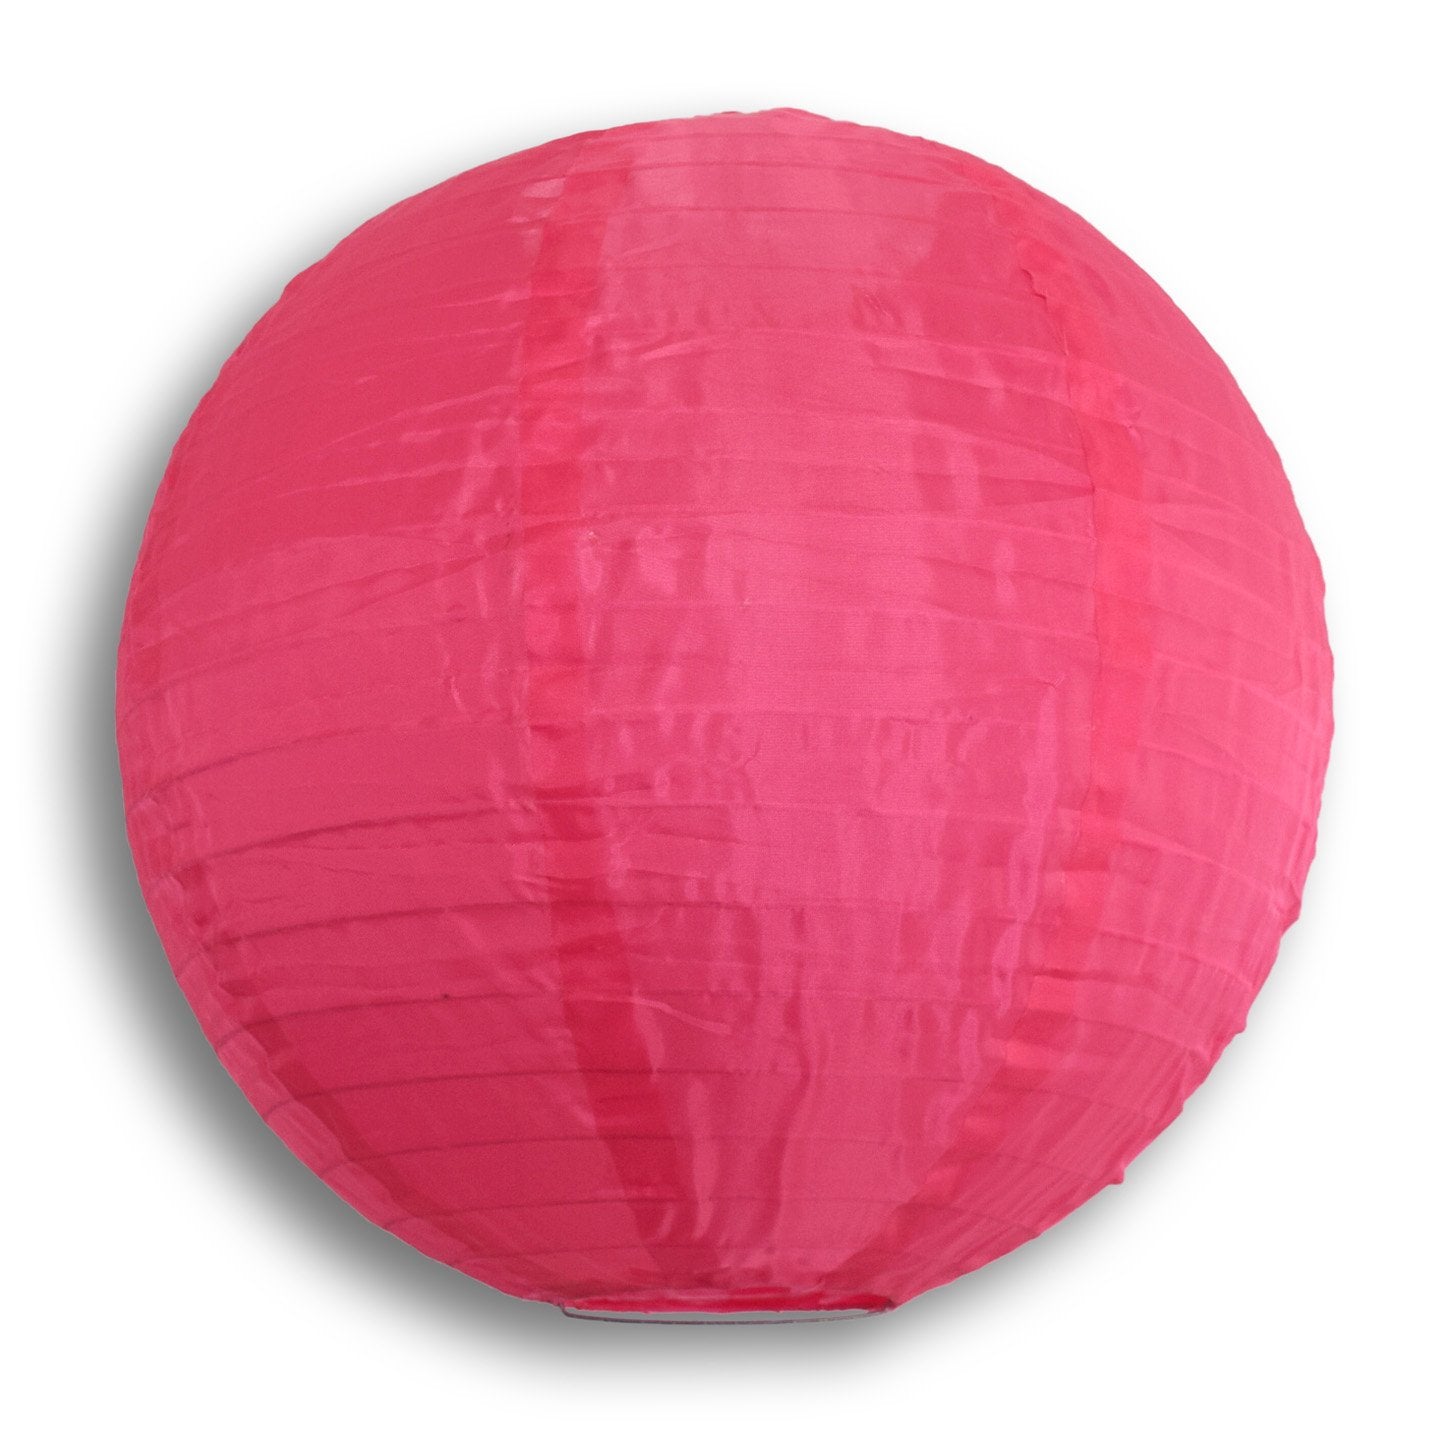 24" Hot Pink Shimmering Nylon Lantern, Even Ribbing, Durable, Hanging - PaperLanternStore.com - Paper Lanterns, Decor, Party Lights & More